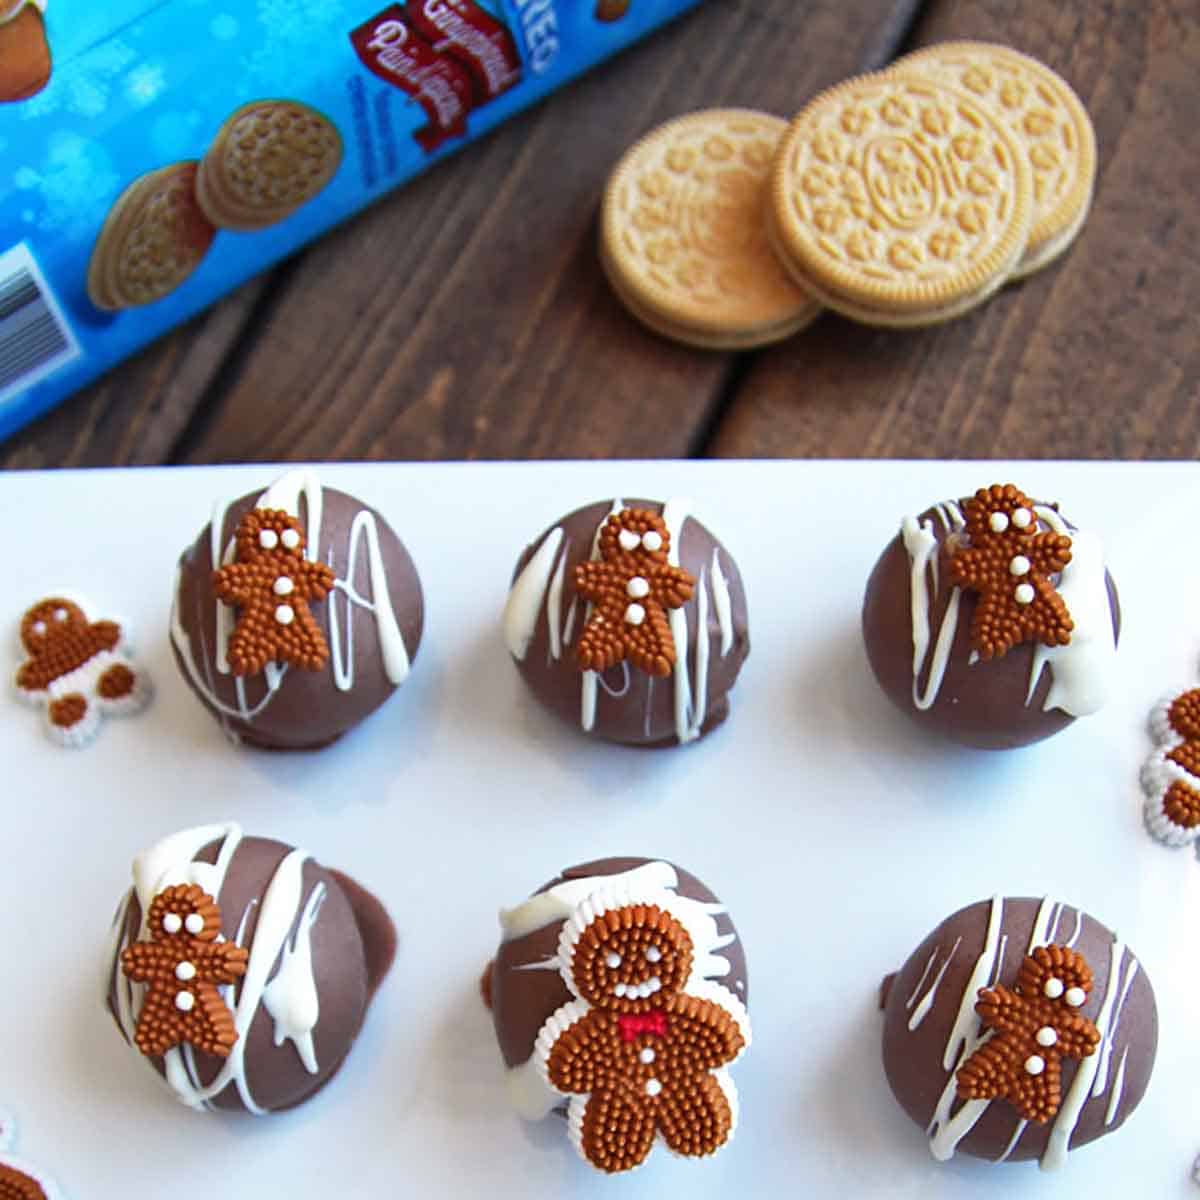 Walmart's Oreo Milkshake Set Is The Perfect Sweet Gift For Cookie